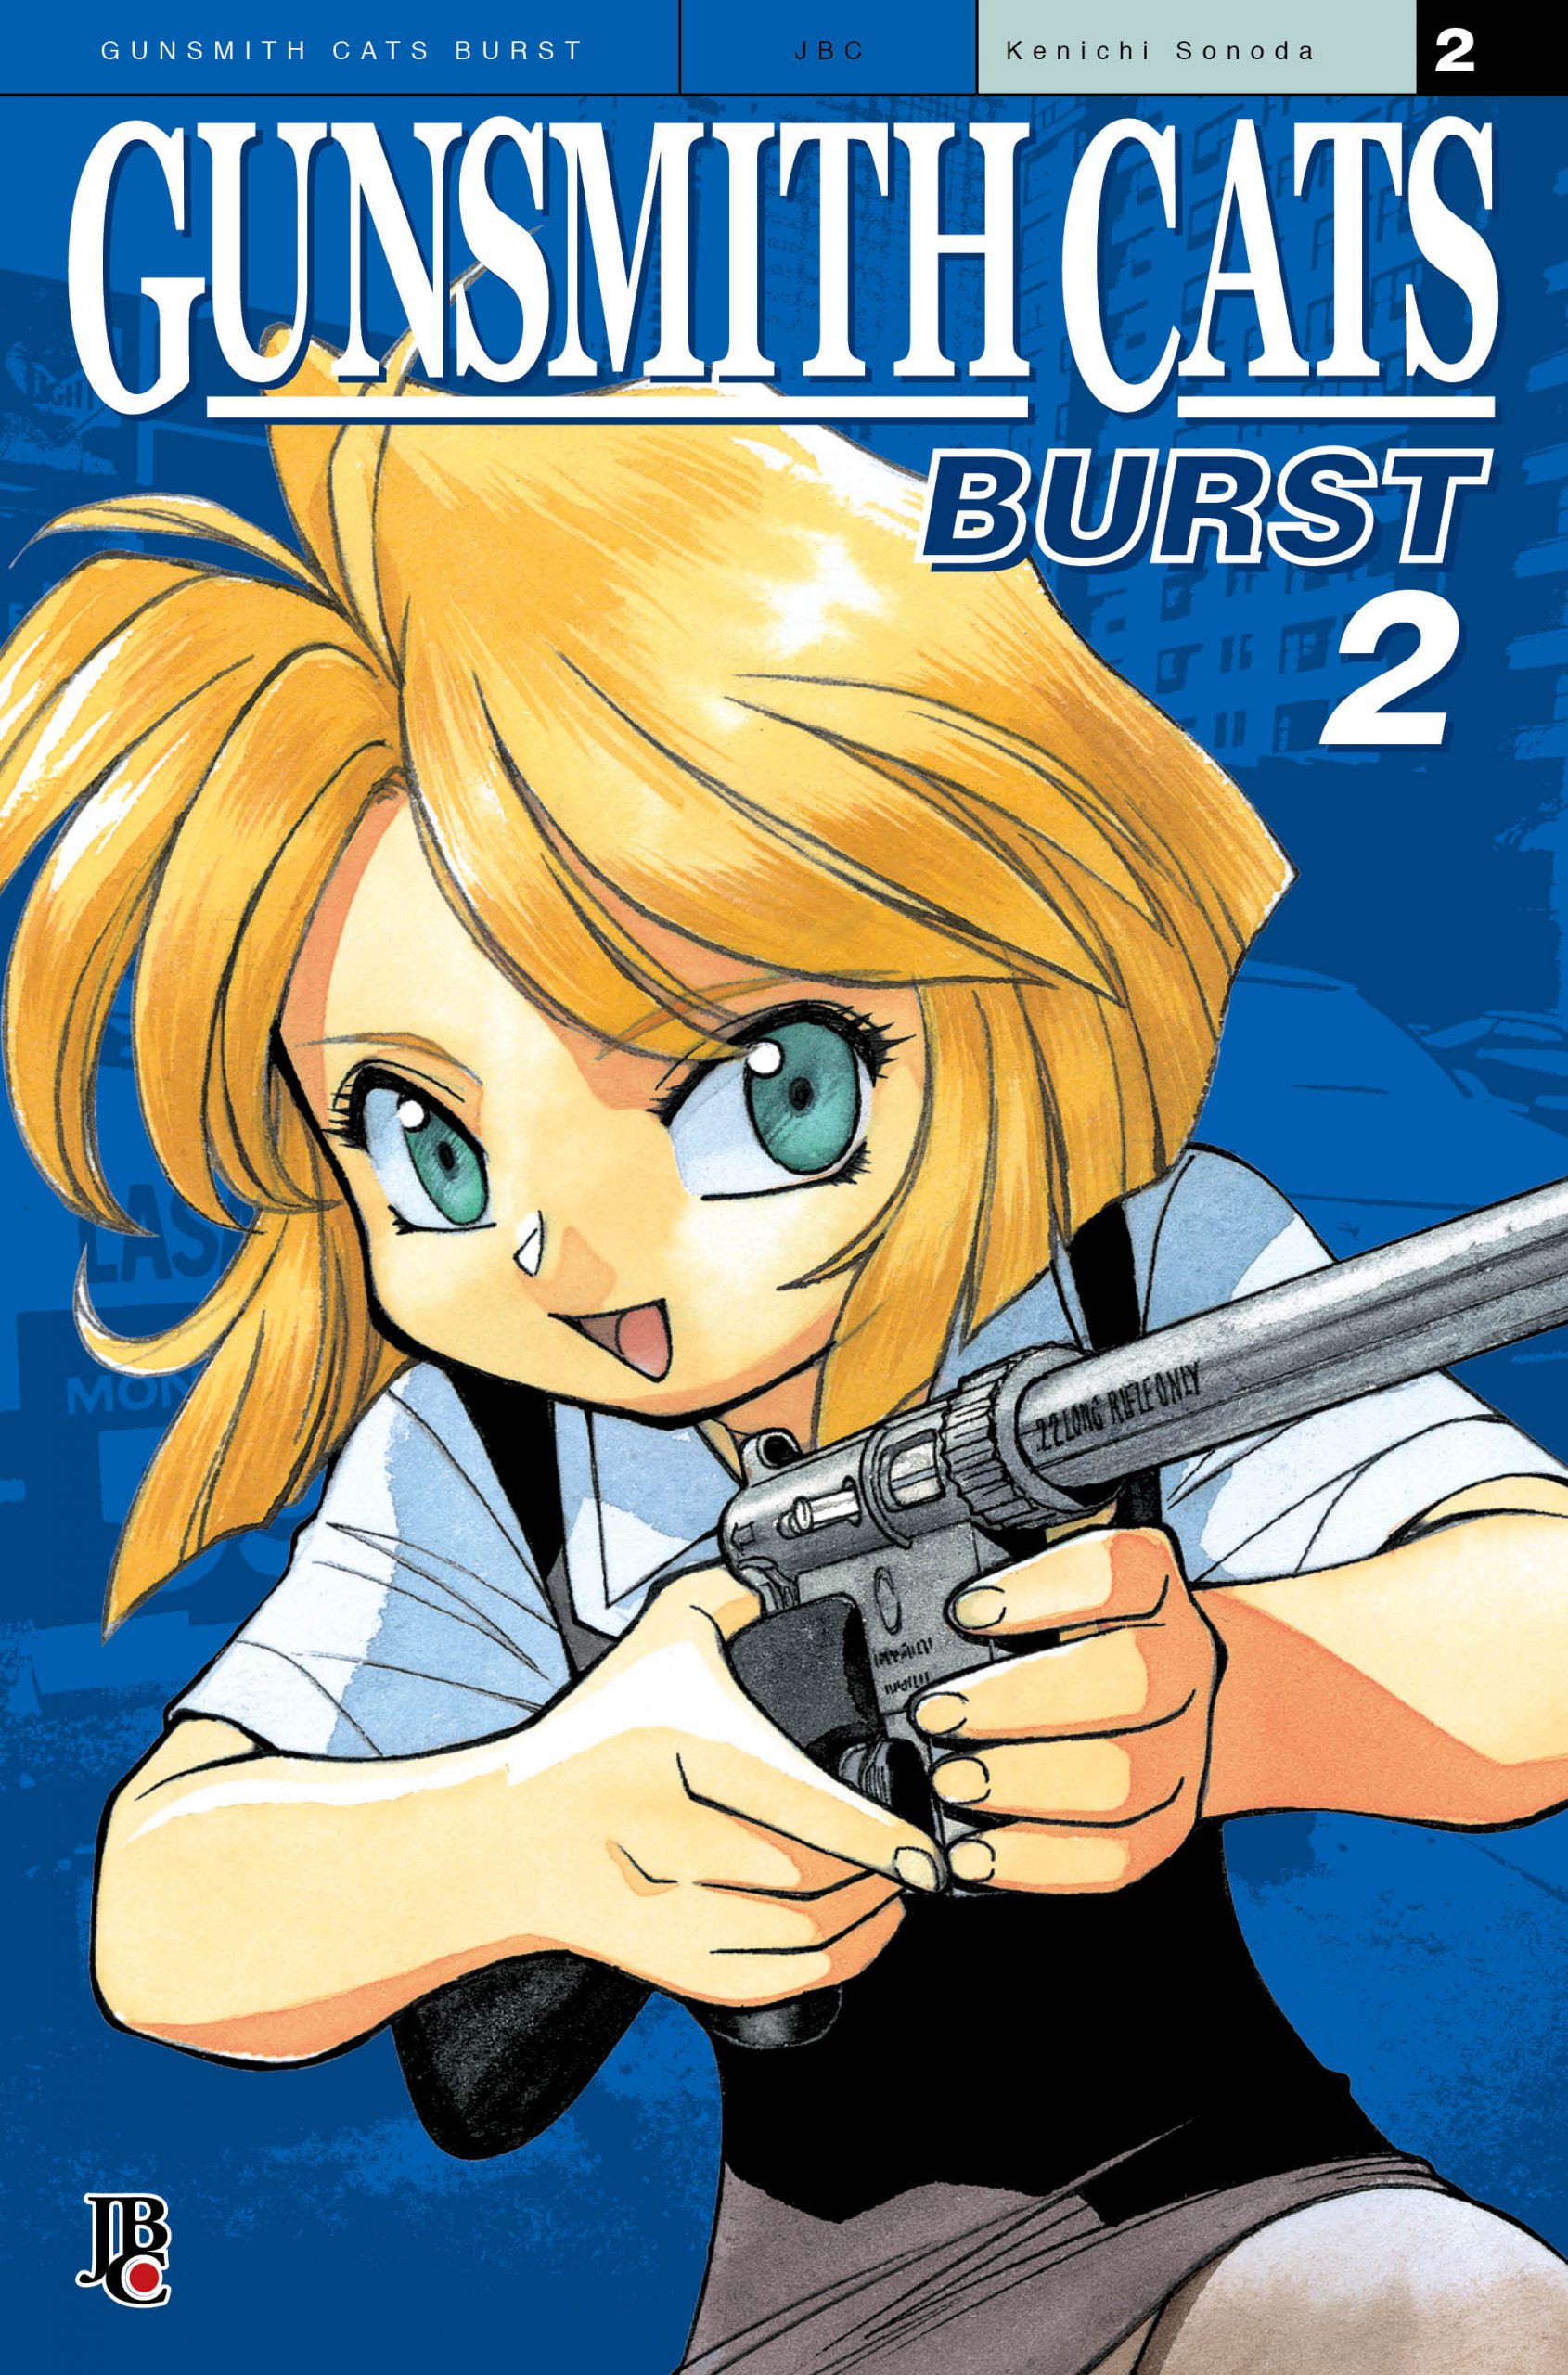 Gunsmith Cats Burst 02 Mangas Jbc